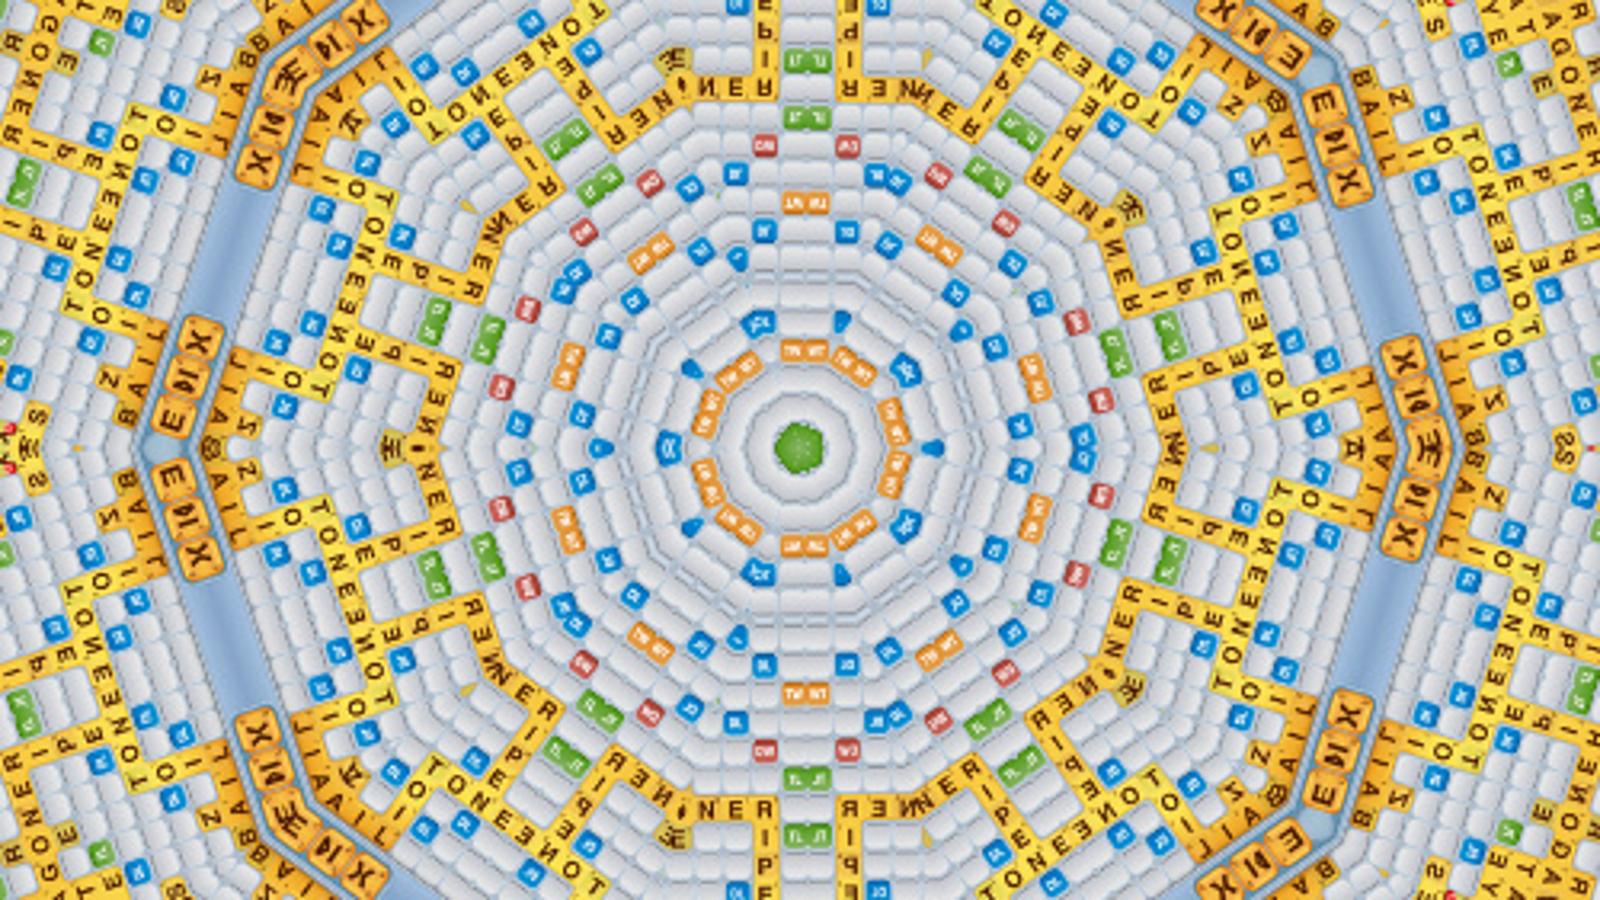 kaleidoscope app